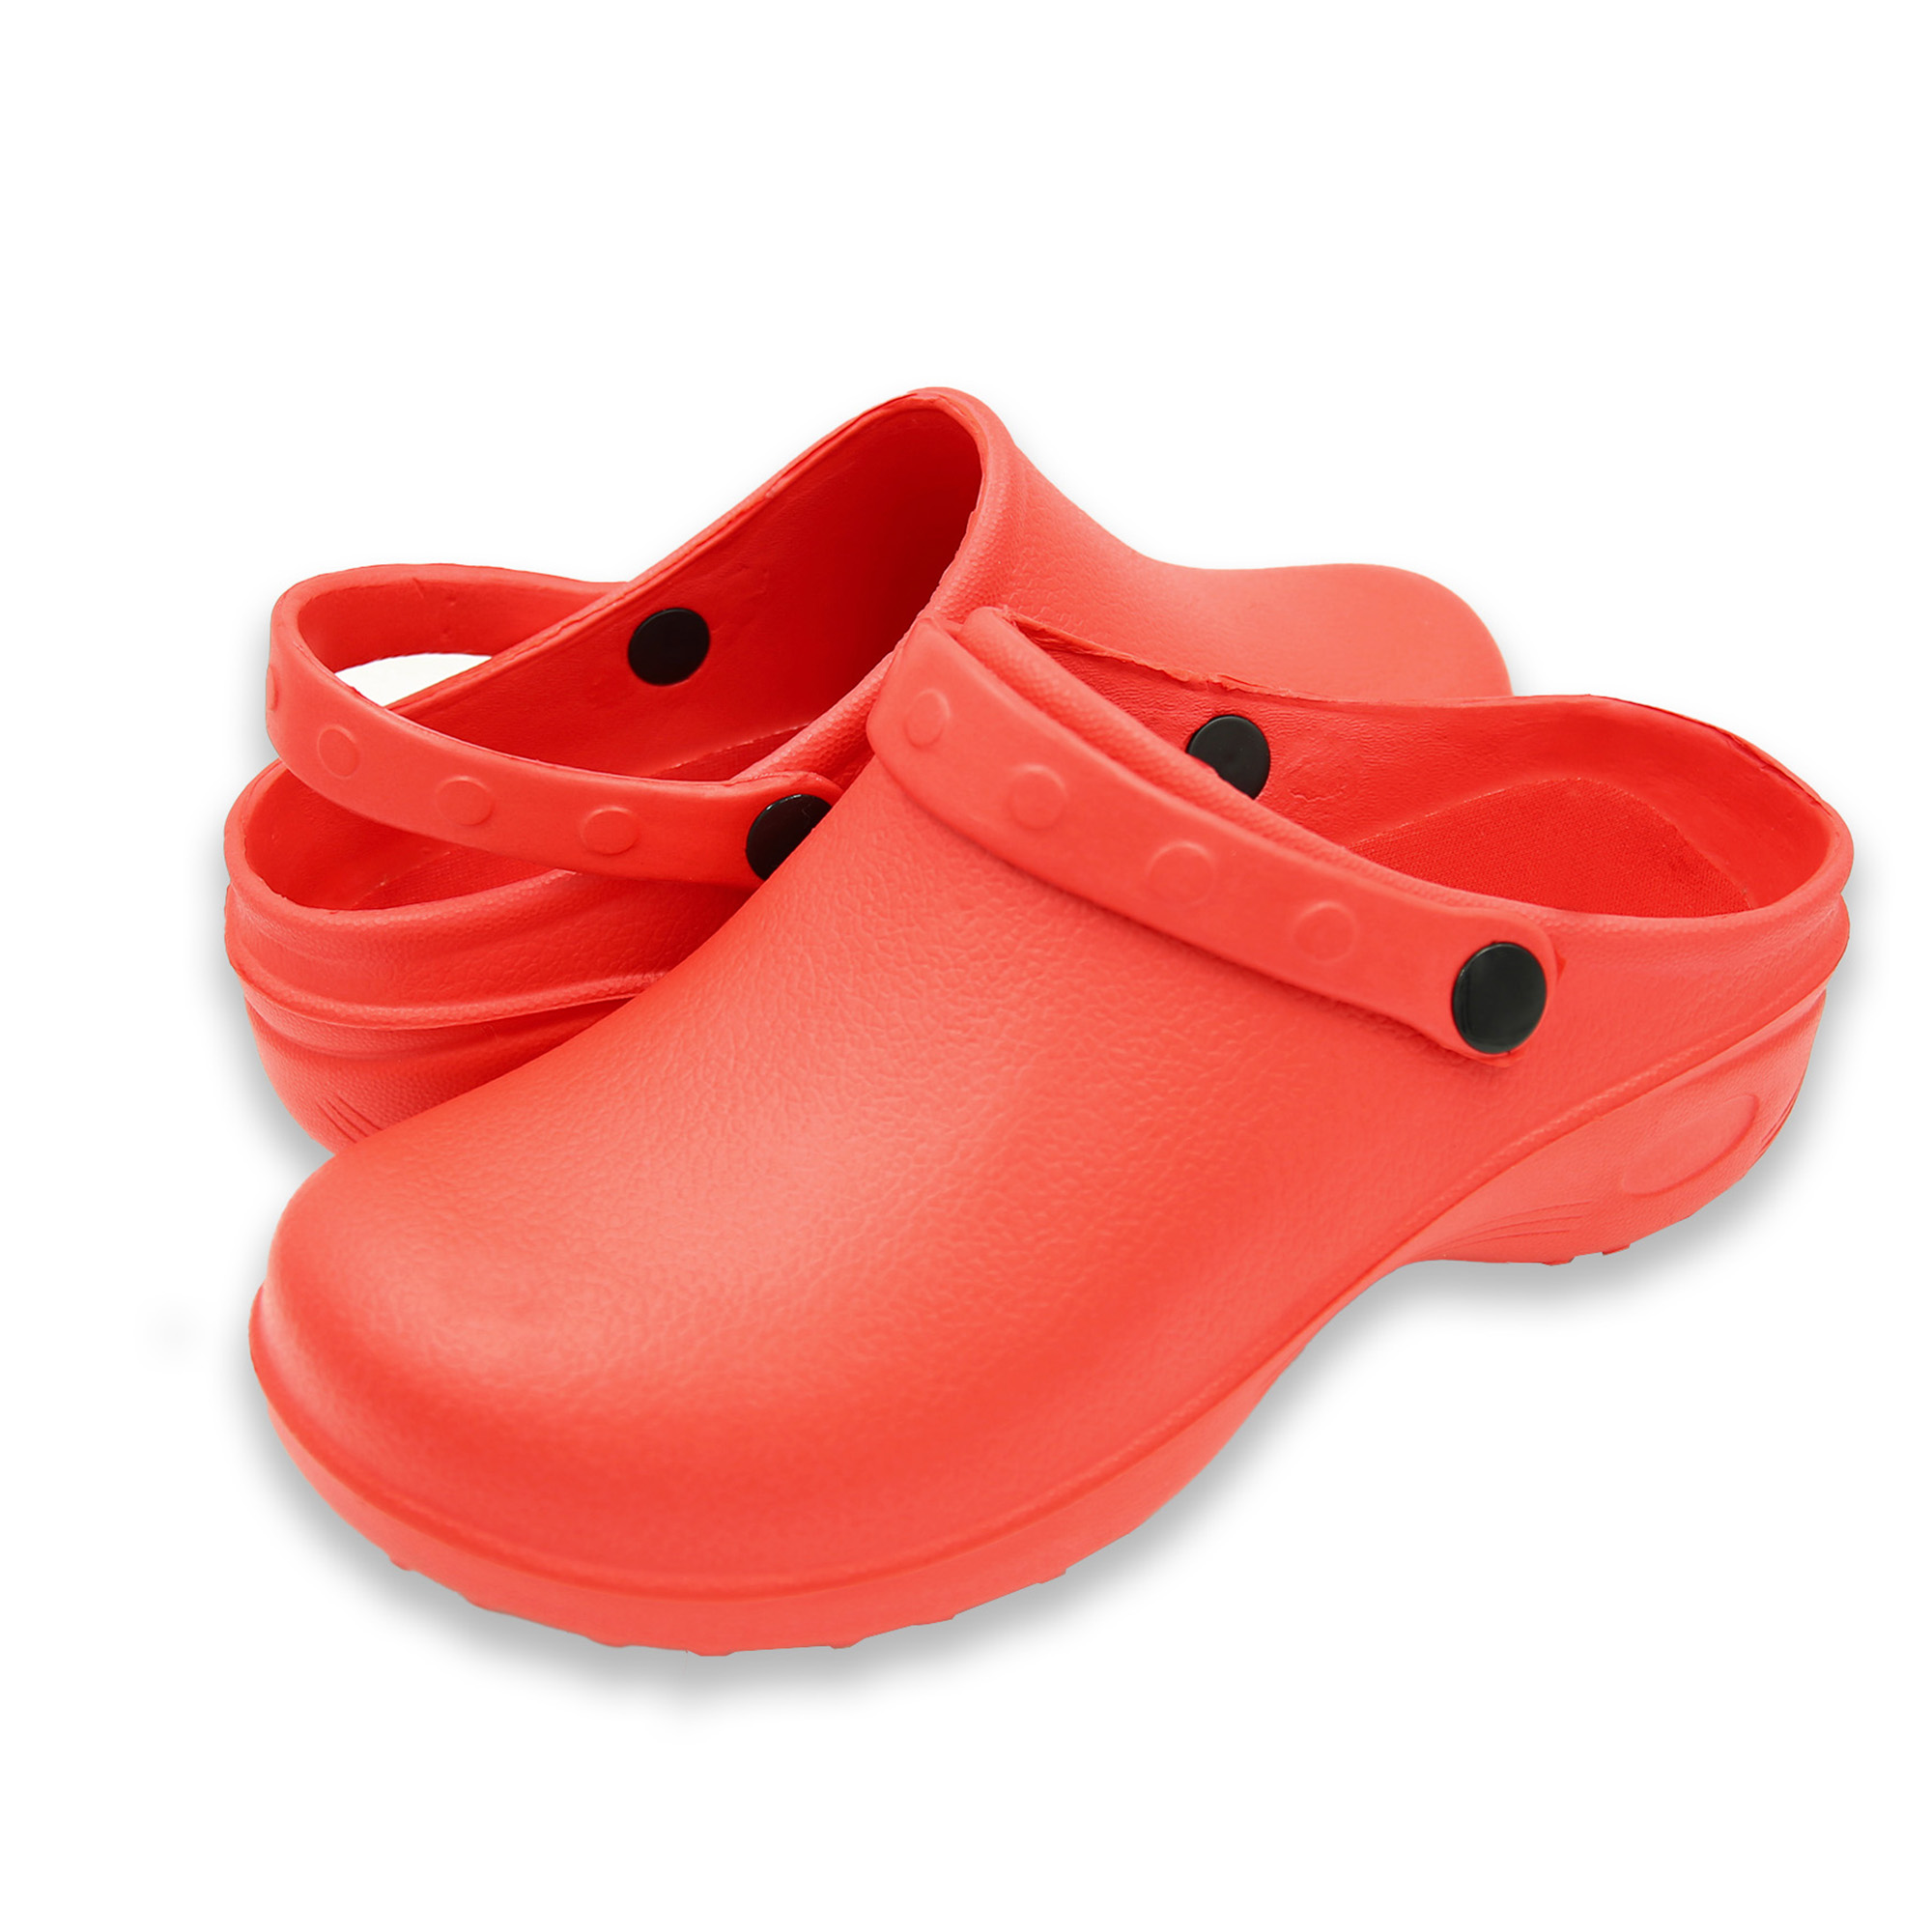 Ventana Men's Clogs Garden Shoes Slingback Sandals Nurse Slip On